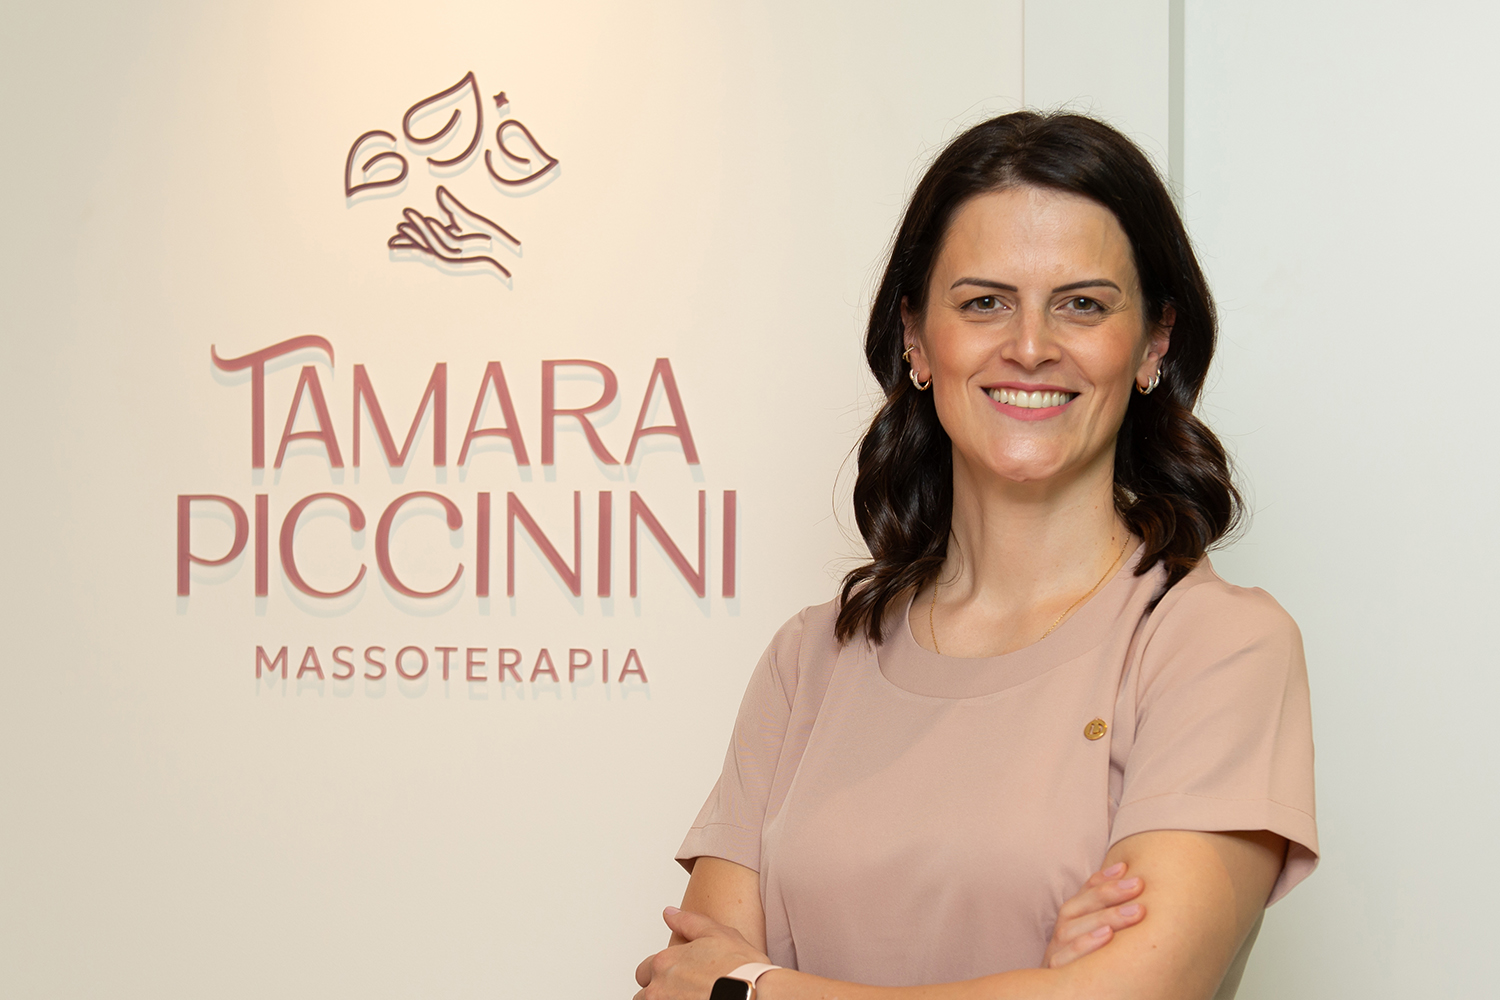 Tamara Piccinini - Massoterapia